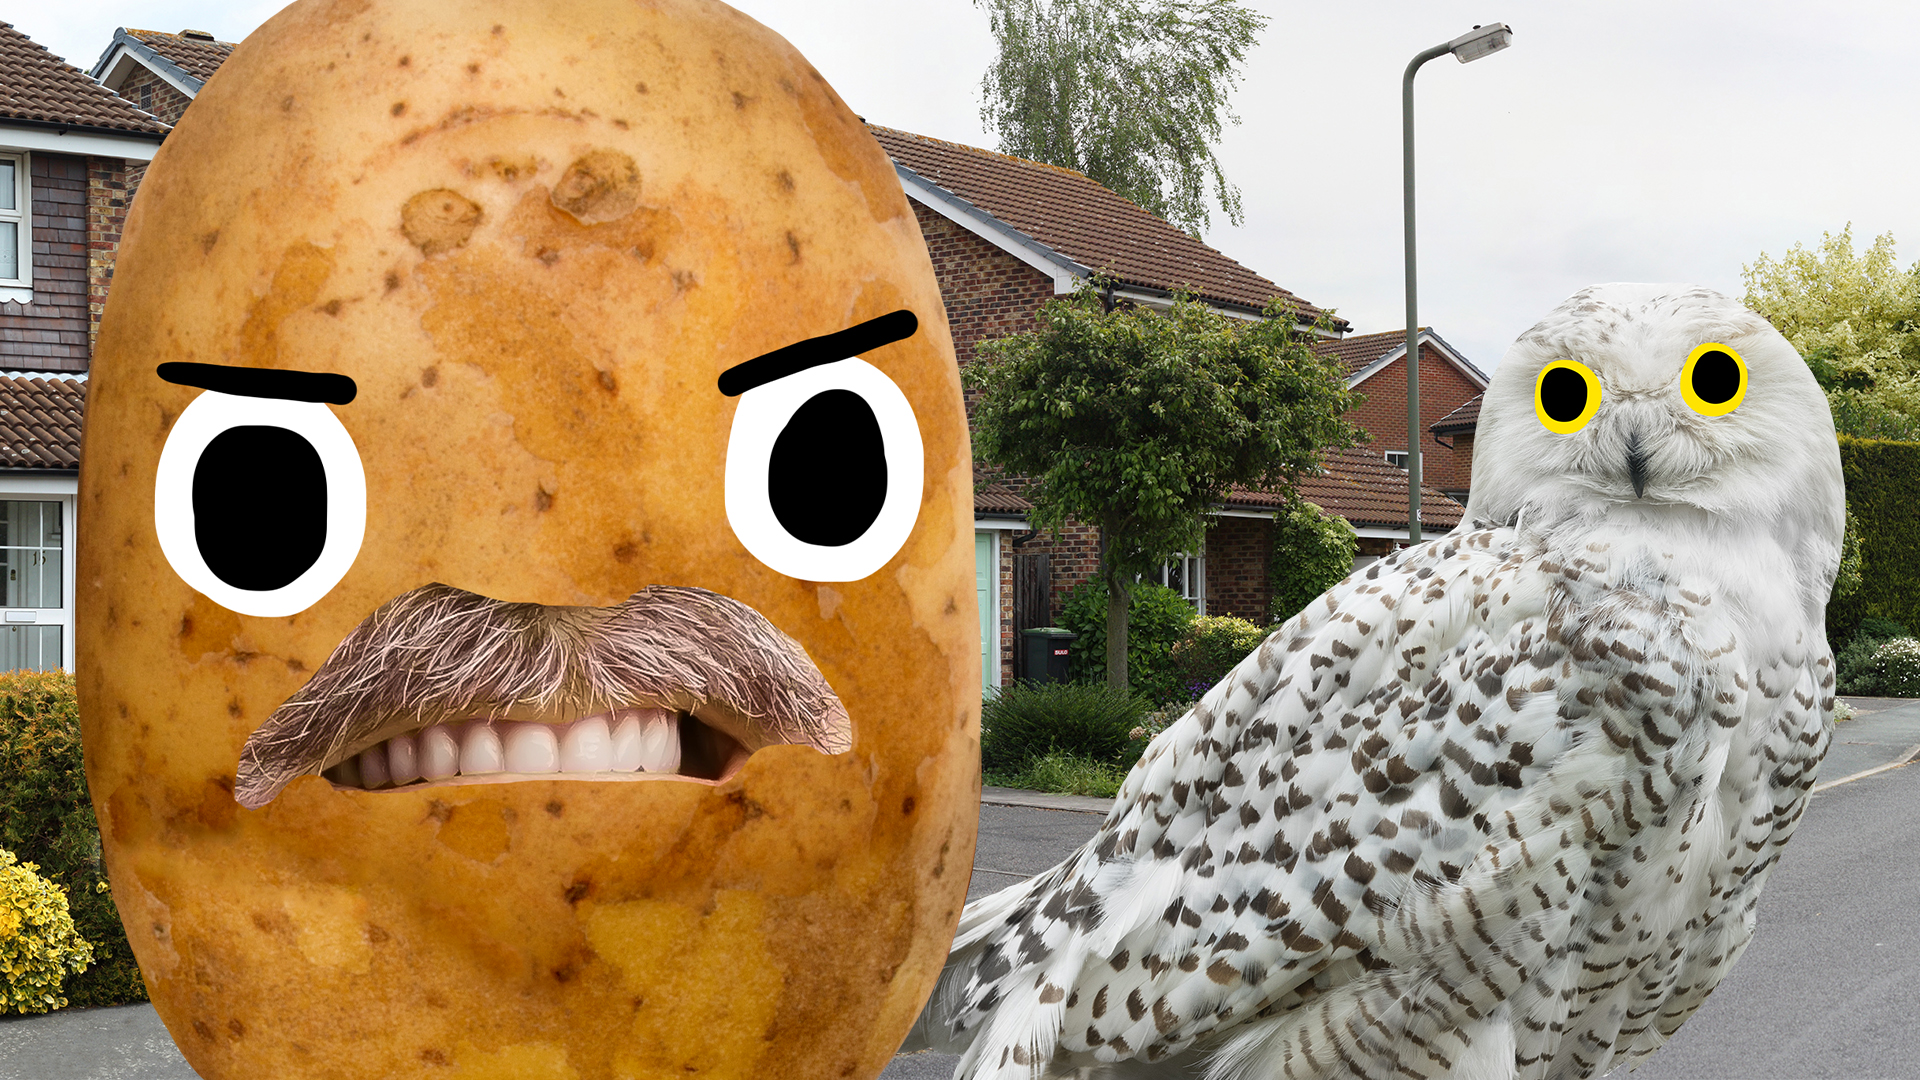 An owl and potato on a suburban street